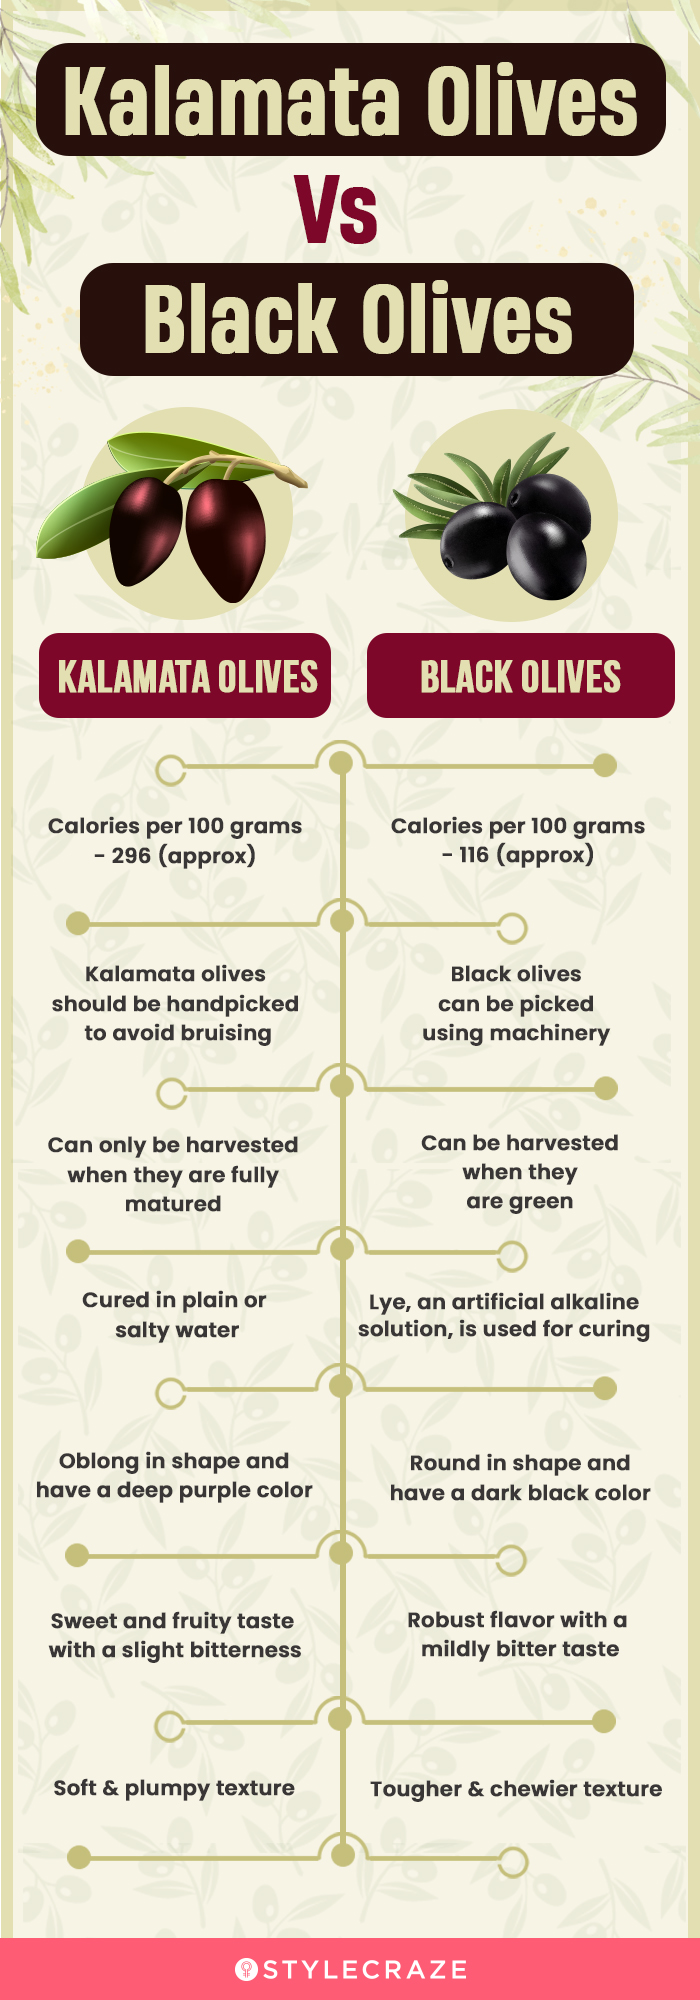 kalamata olives vs black olives (infographic)